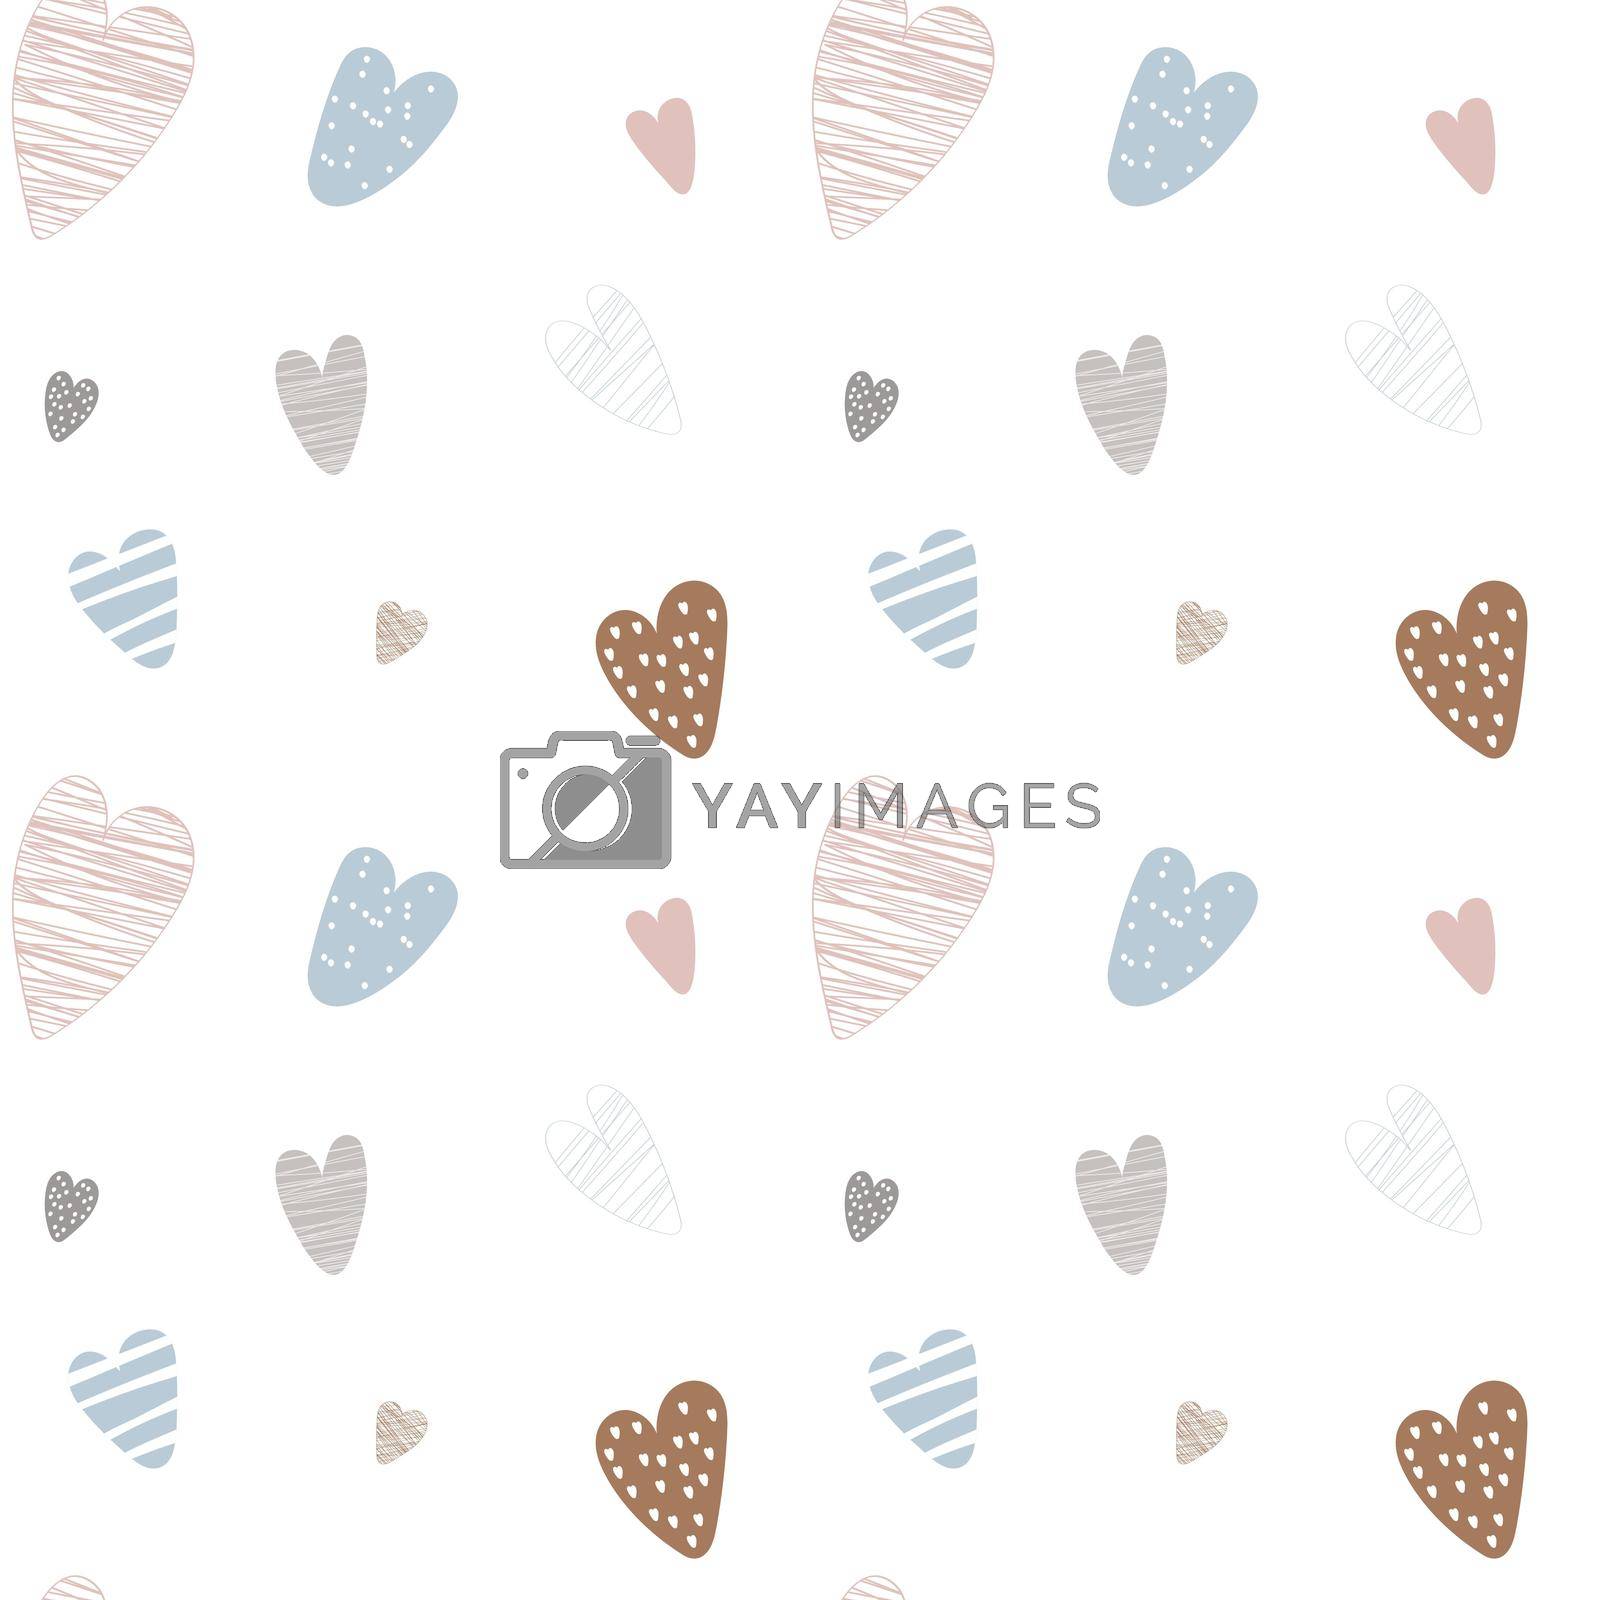 Royalty free image of Love heart pattern by tan4ikk1